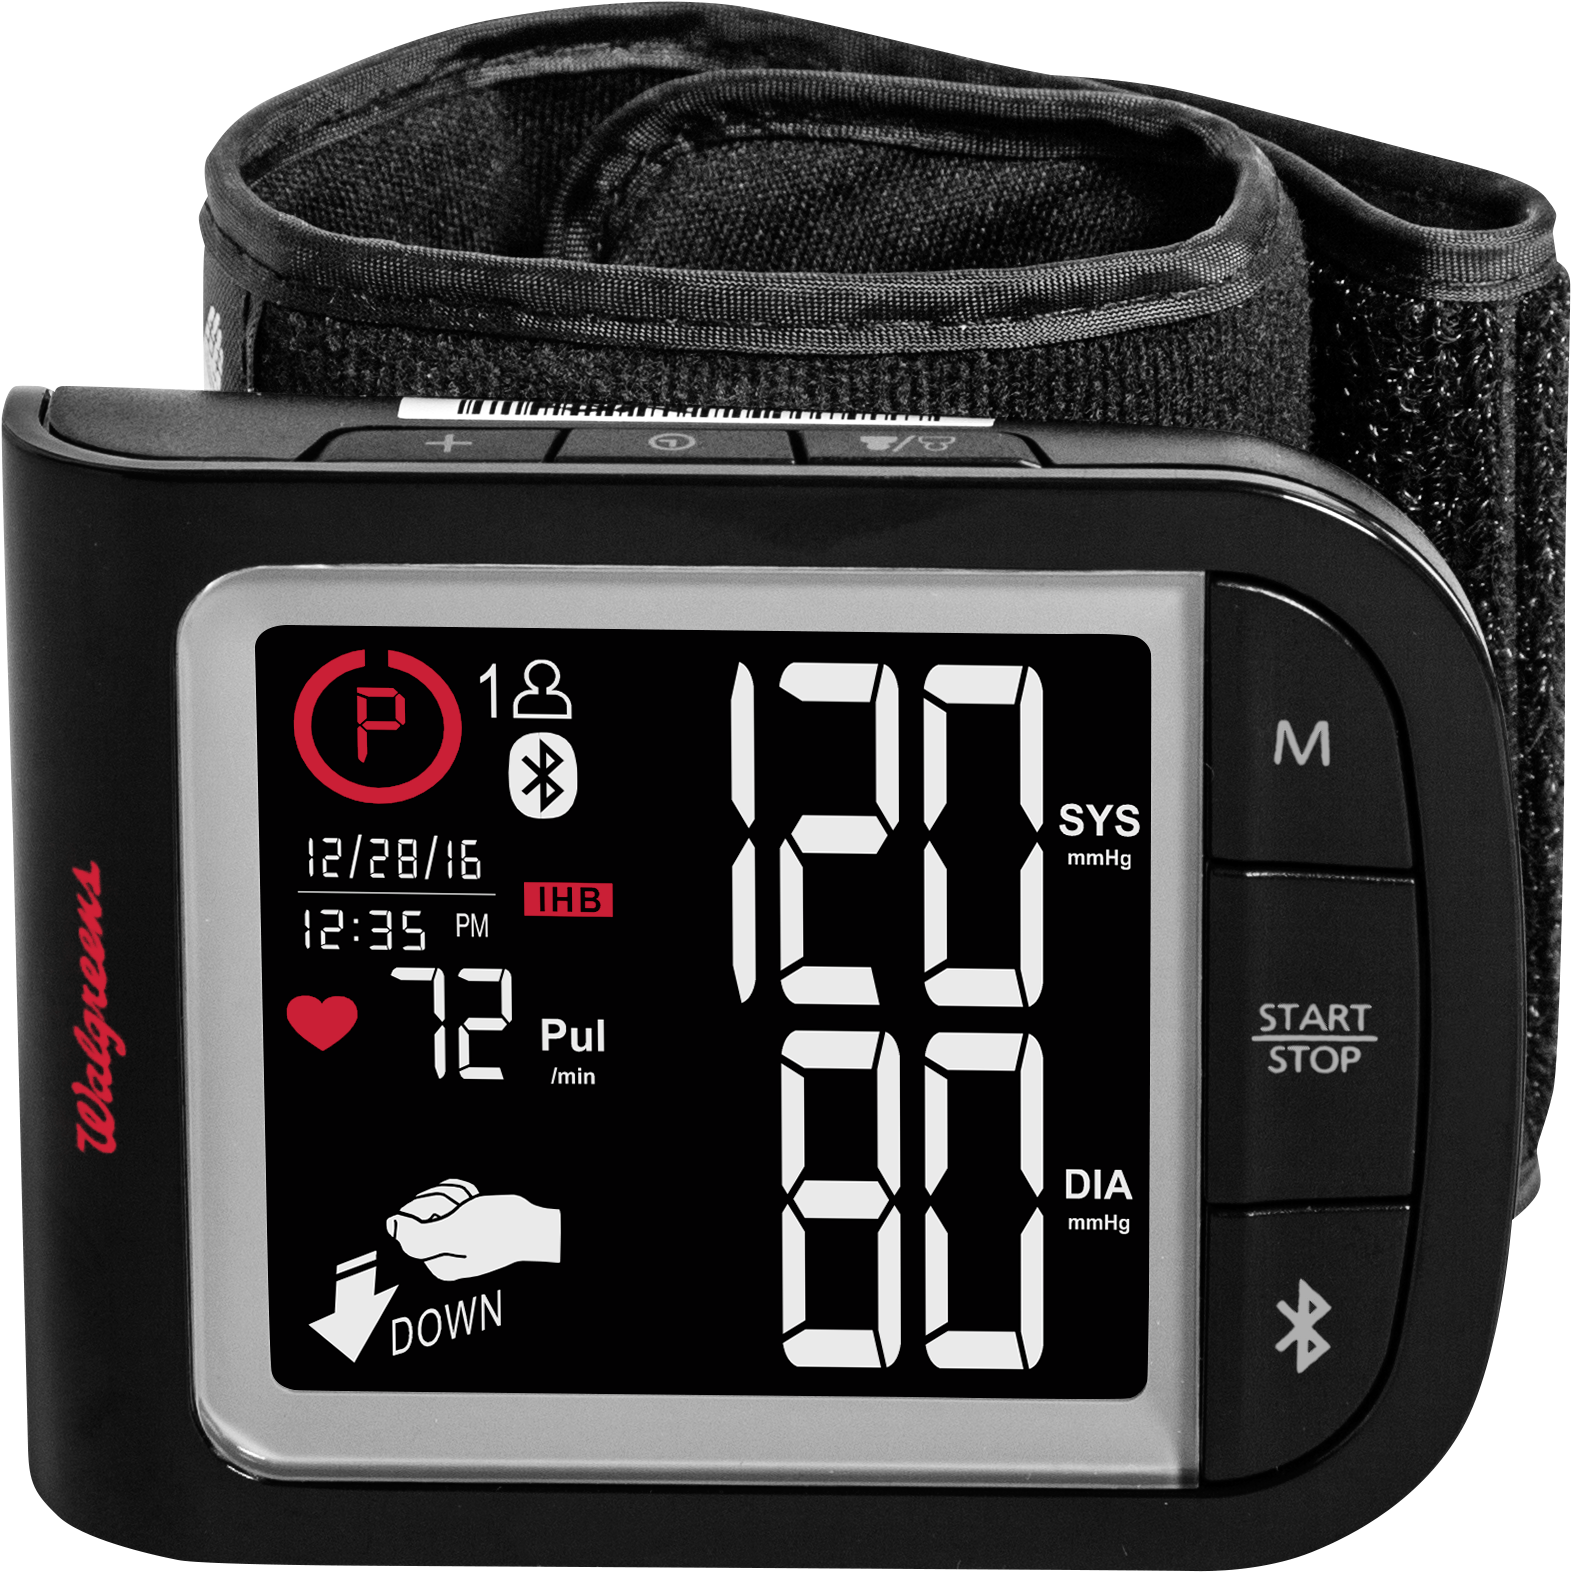 Digital Blood Pressure Monitor Display PNG